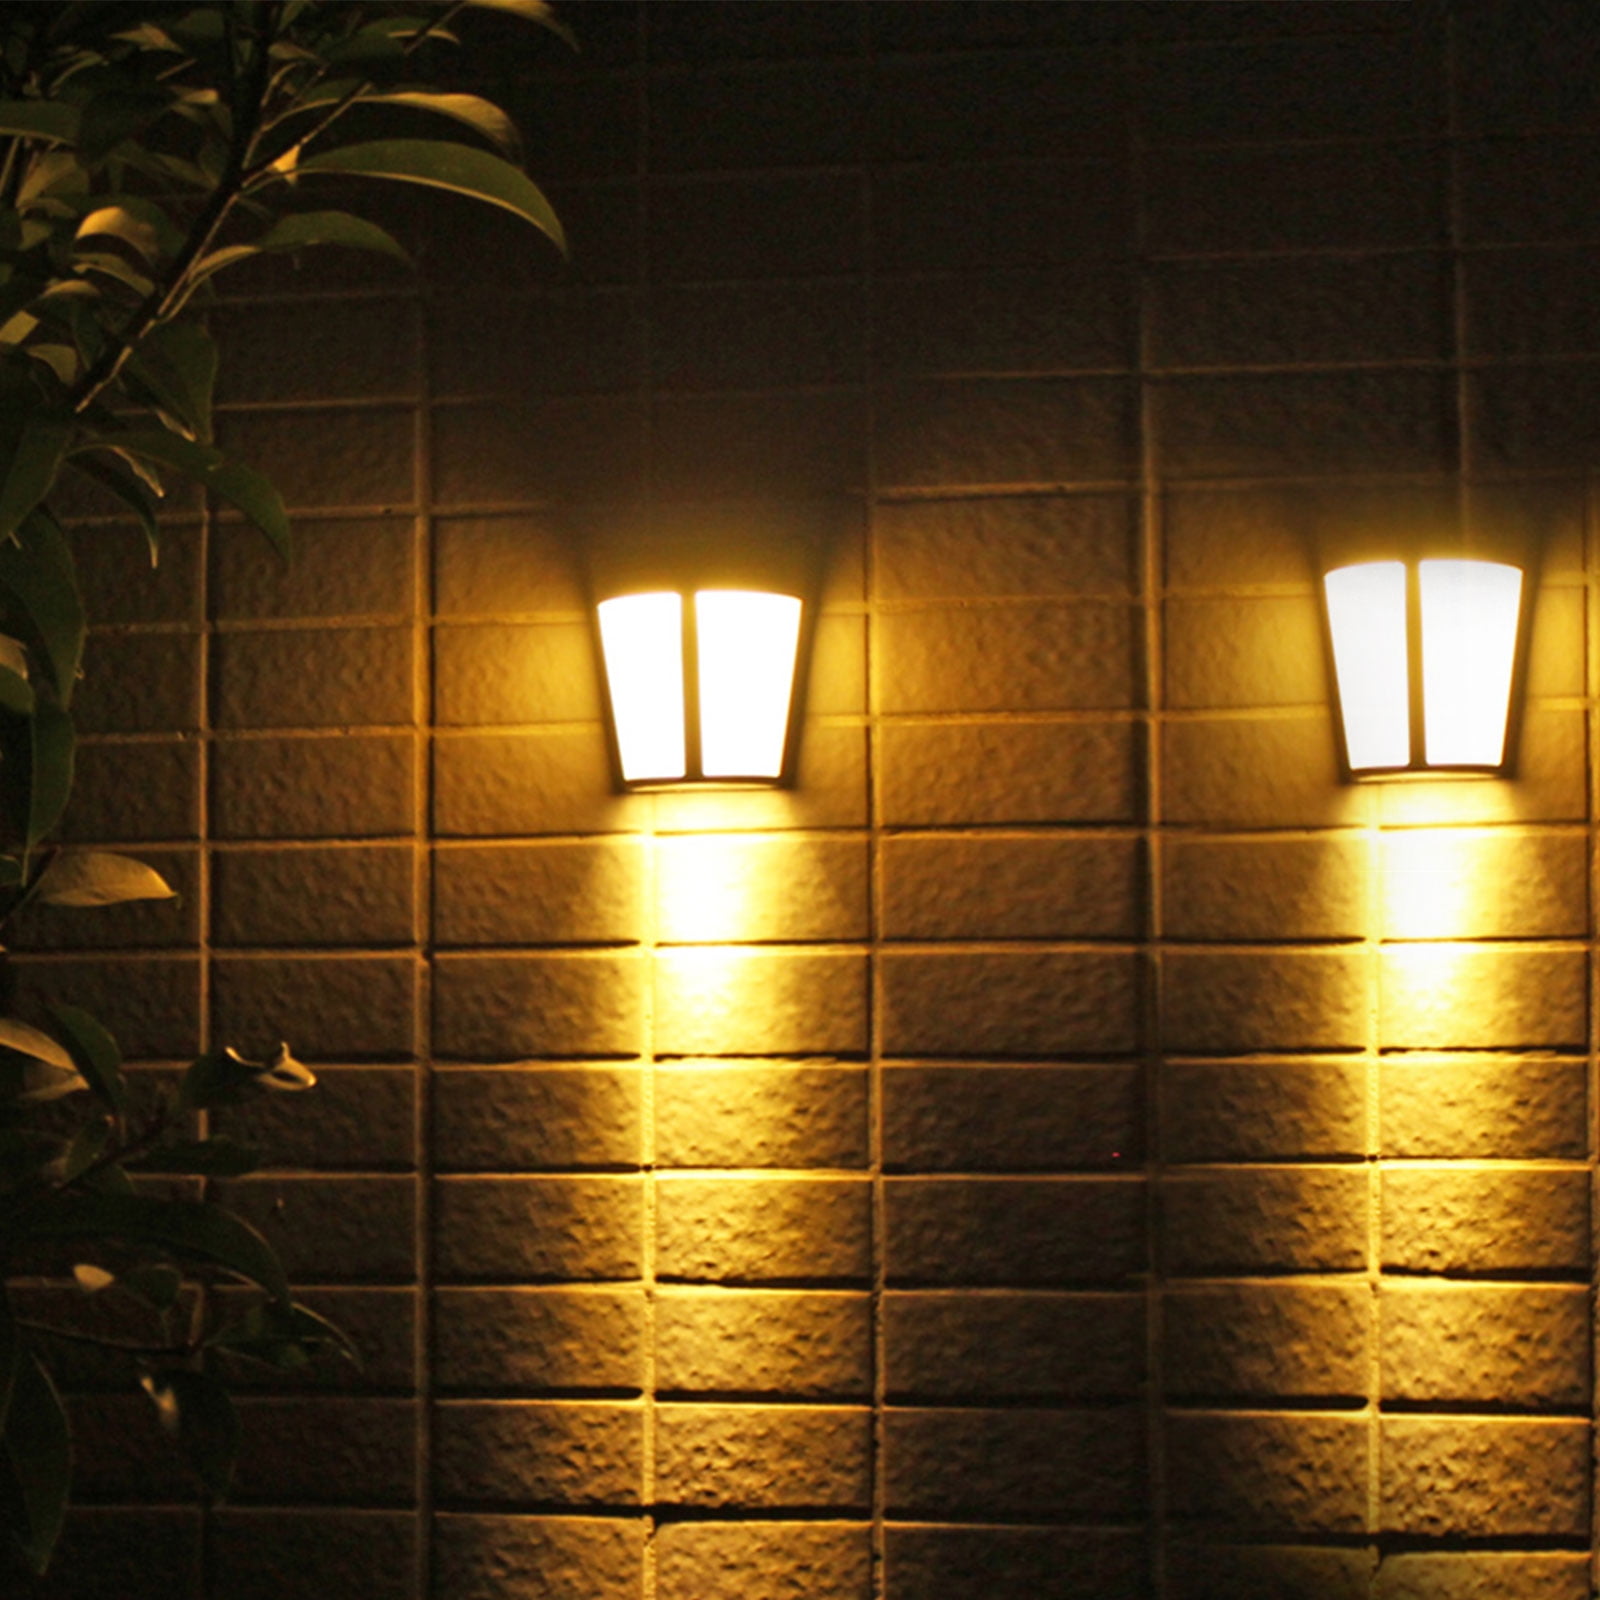 2Pcs LED Wall Light Solar Power Lamp Outdoor Garden Path Lawn Landscape Security